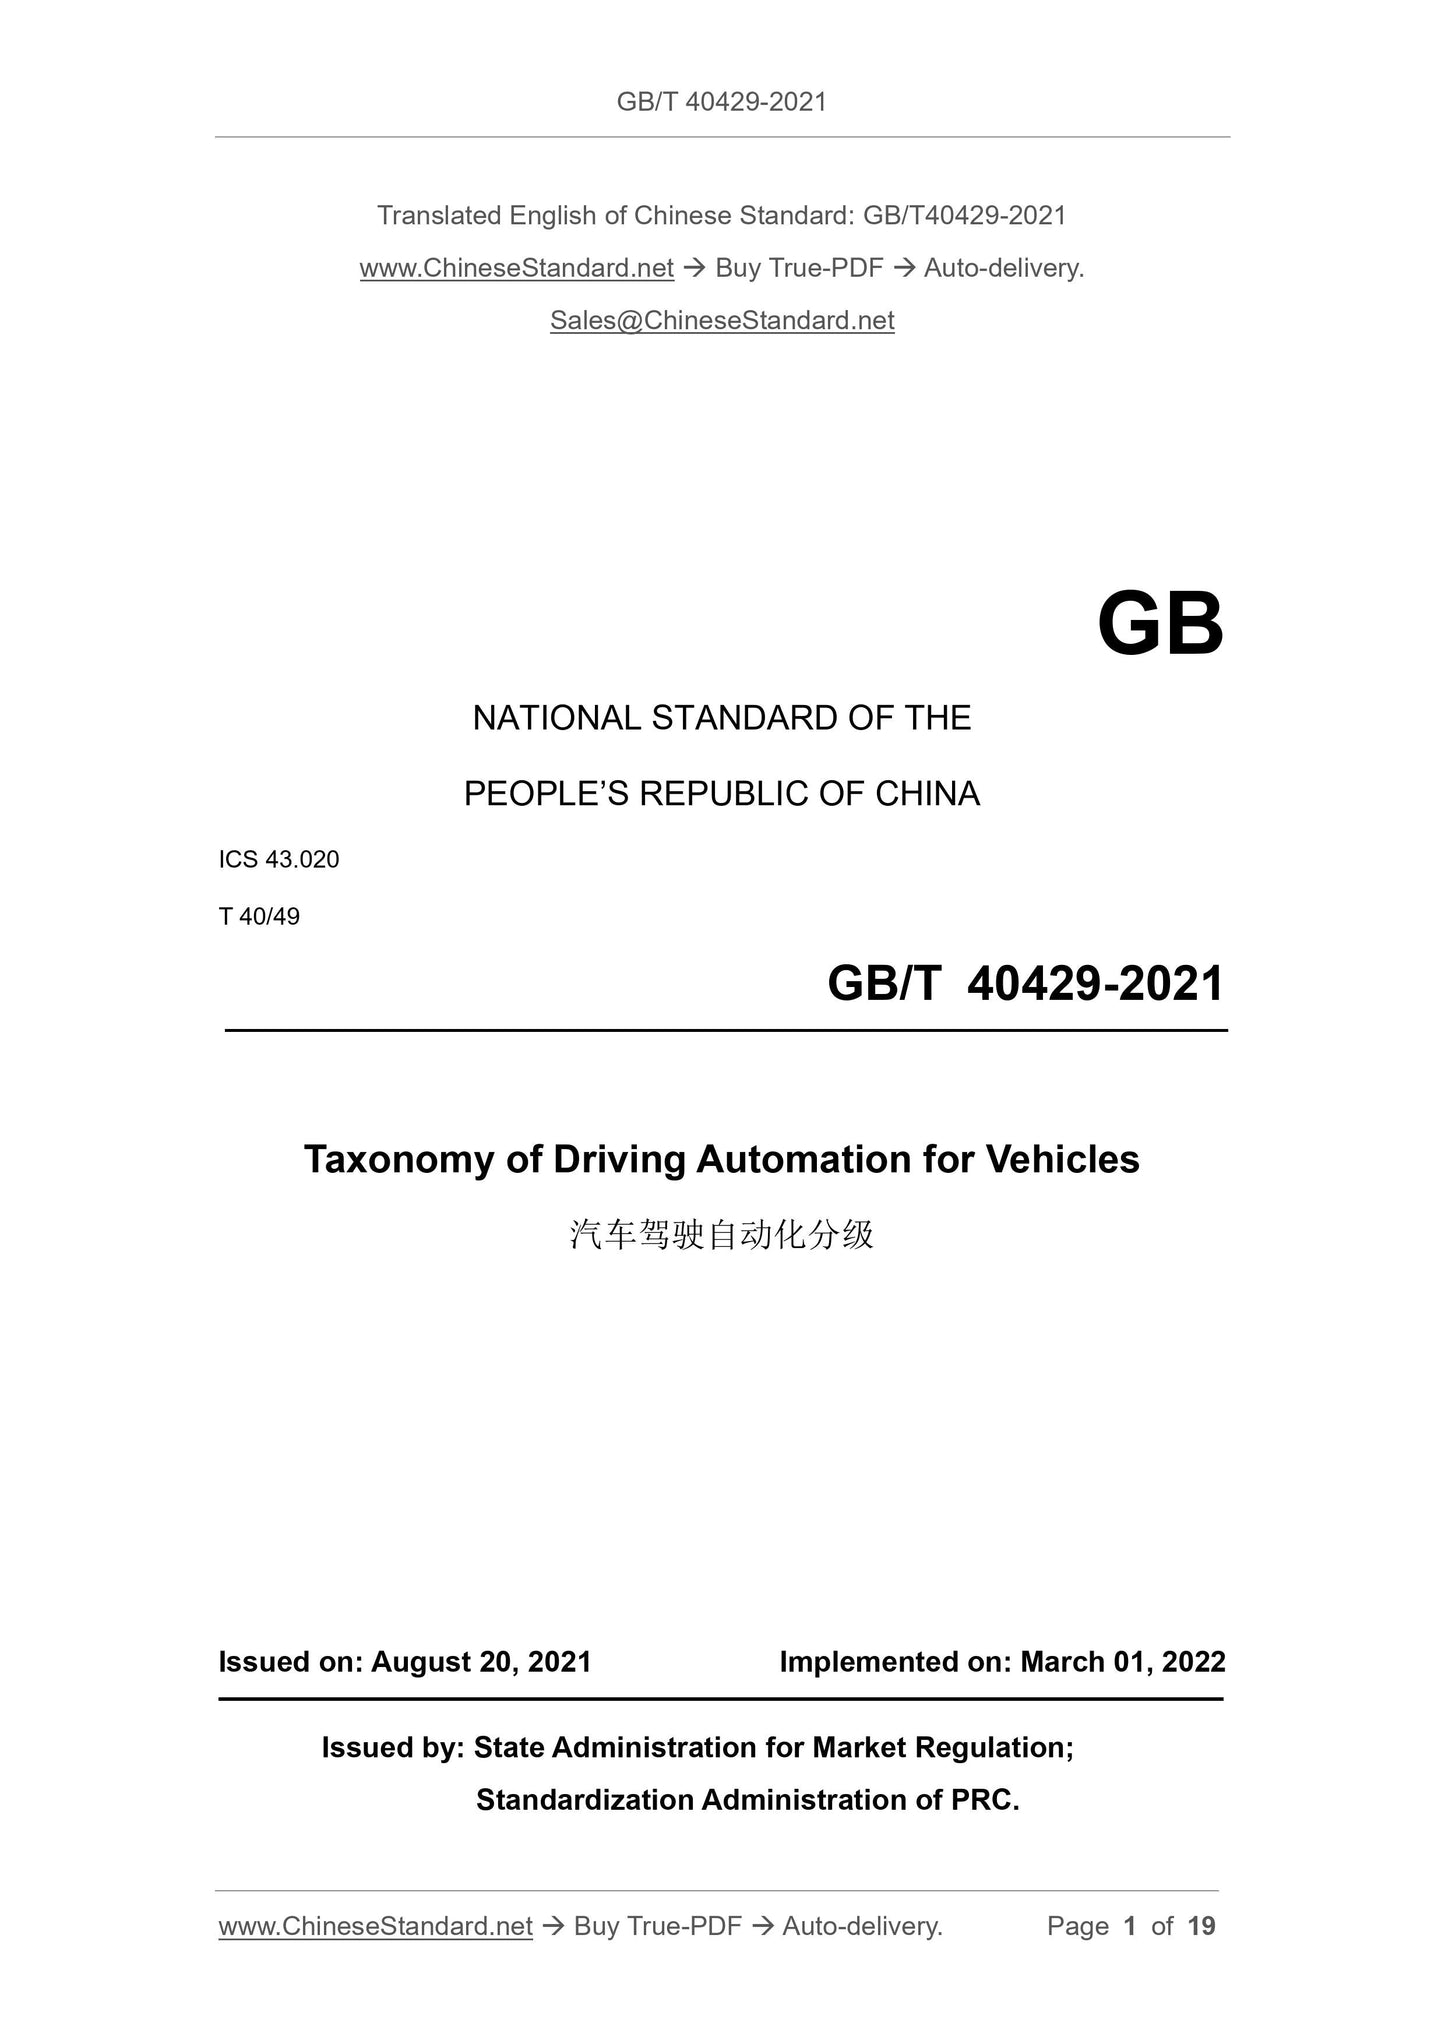 GBT40429-2021 Page 1